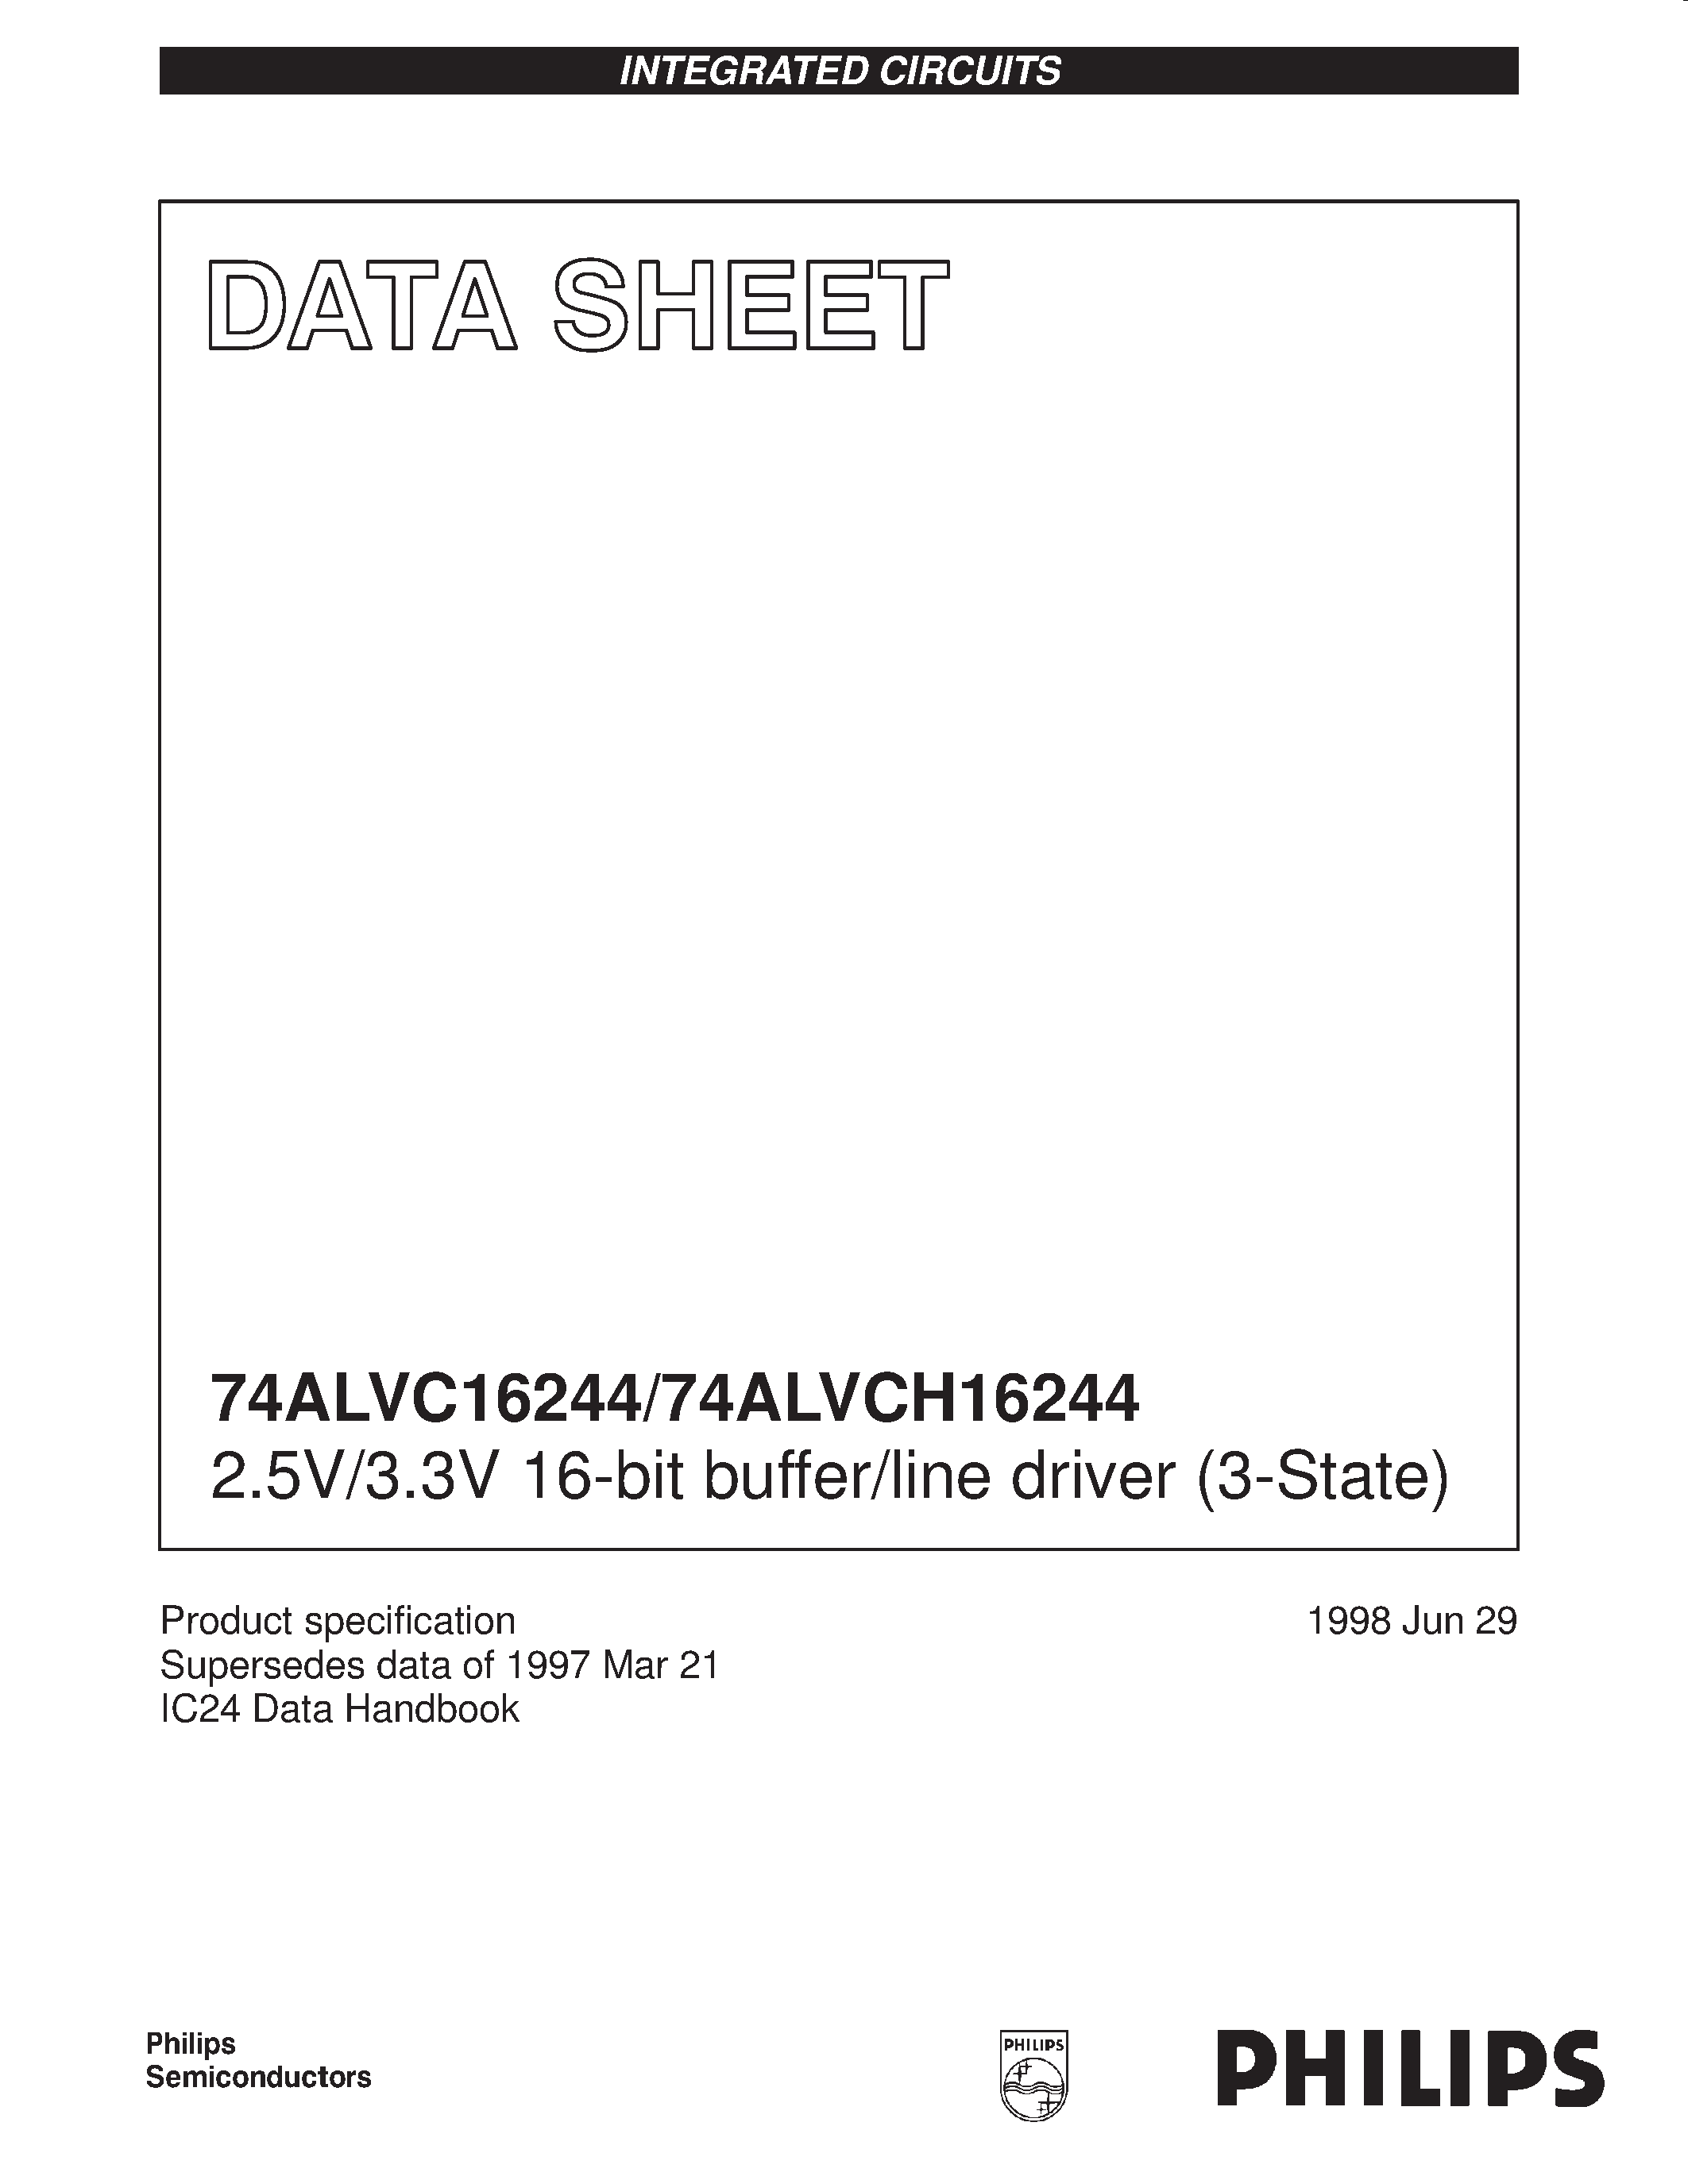 Даташит 74ALVC16244DL - 2.5V/3.3V 16-bit buffer/line driver 3-State страница 1